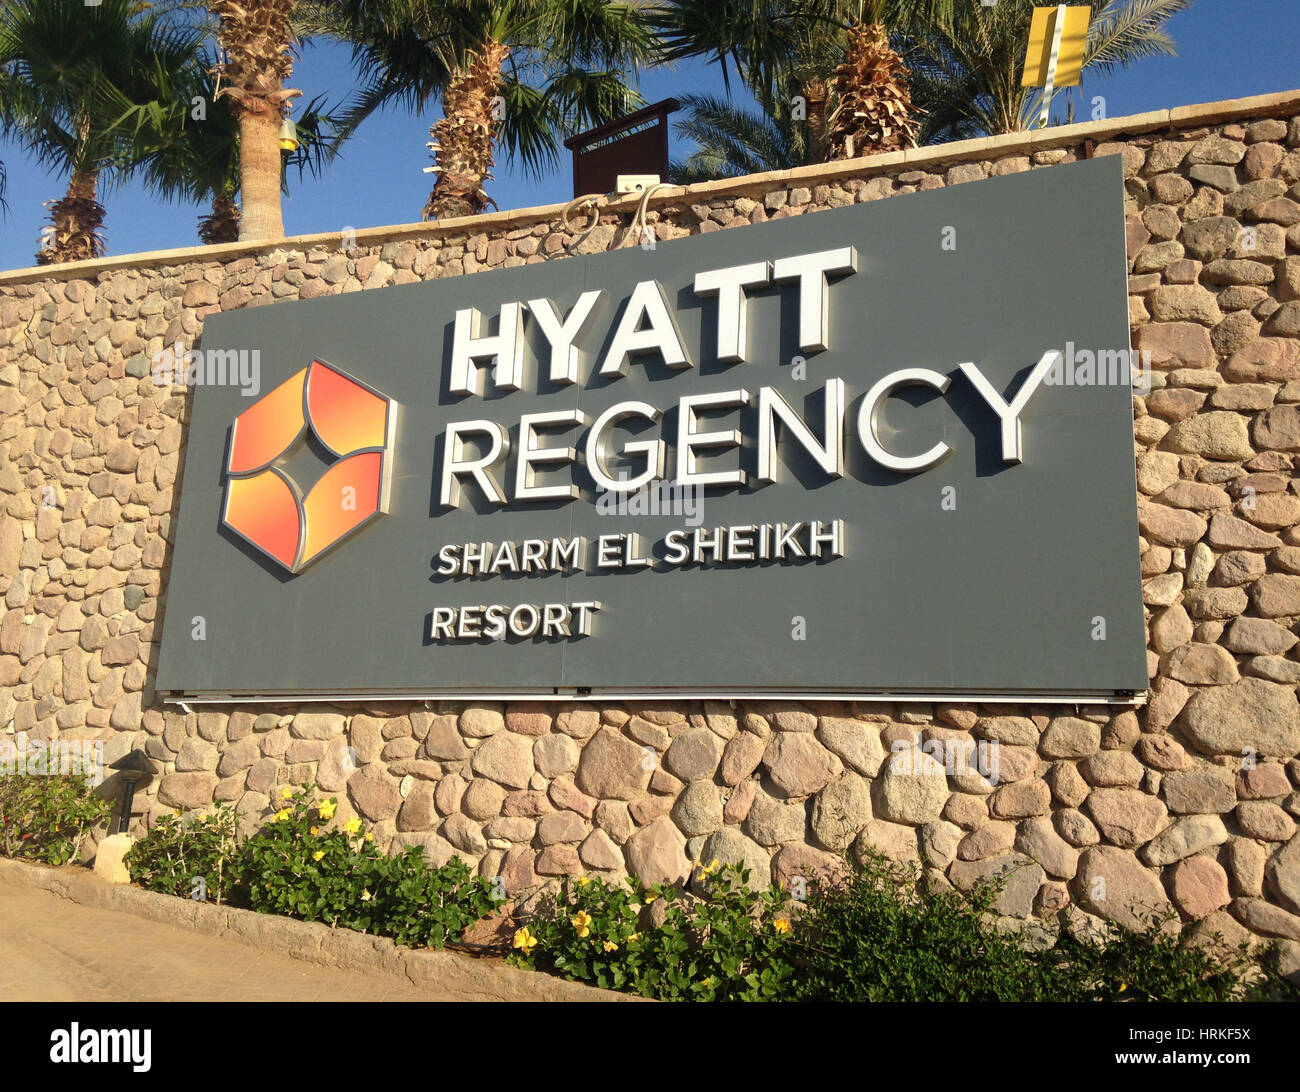 Hyatt Regency resort sign in Sharm El Sheikh Egypt Stock Photo